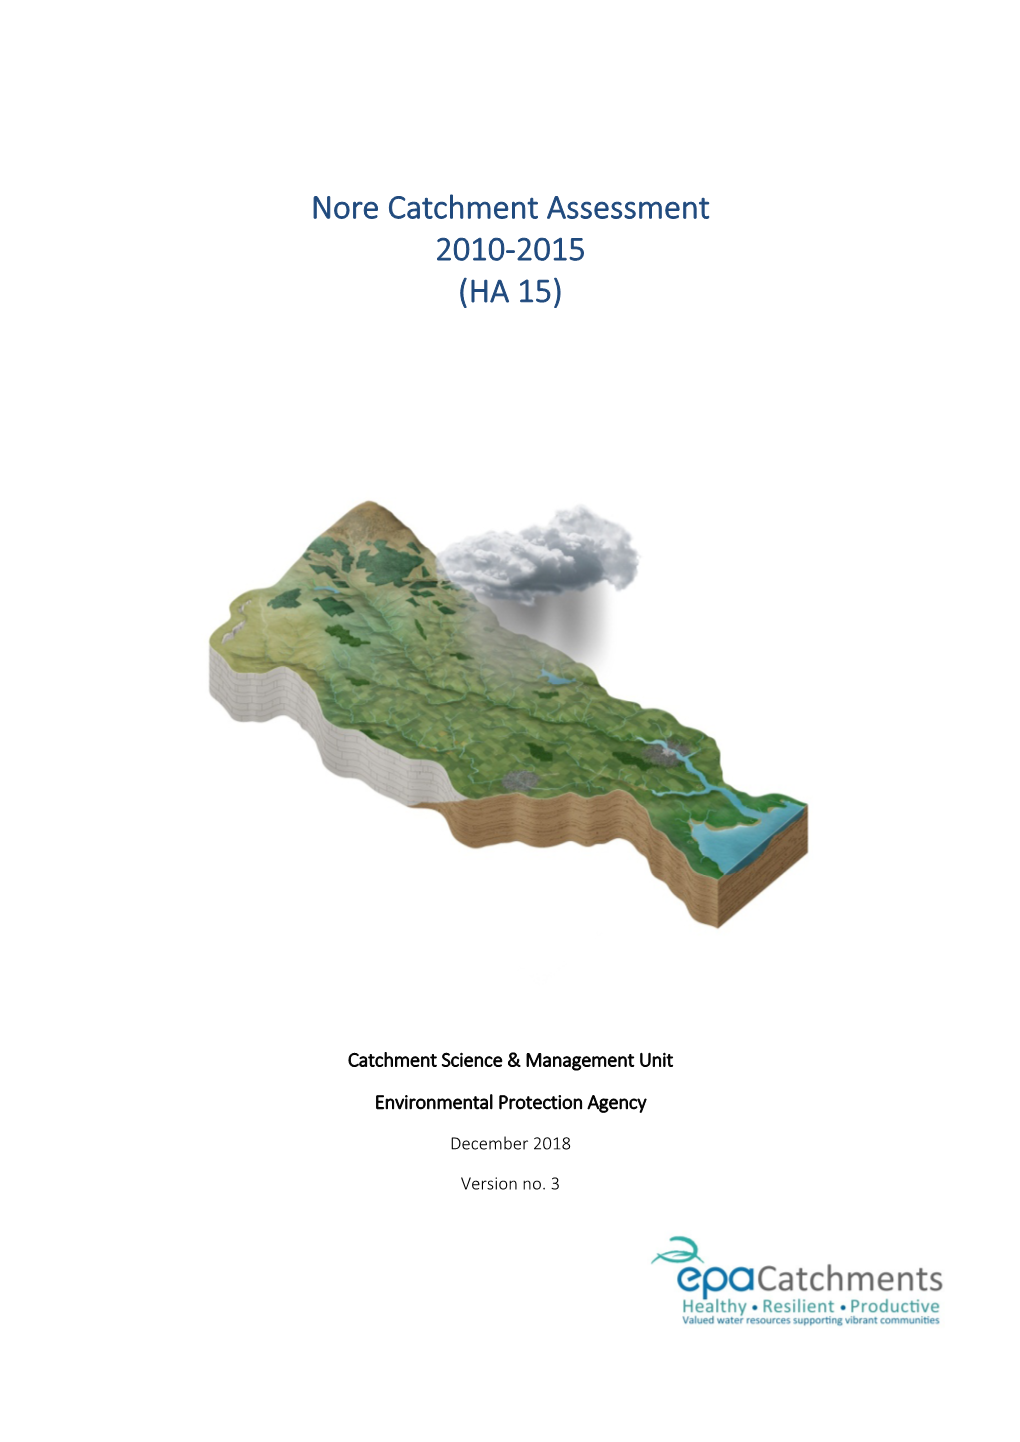 Nore Catchment Assessment 2010-2015 (HA 15)